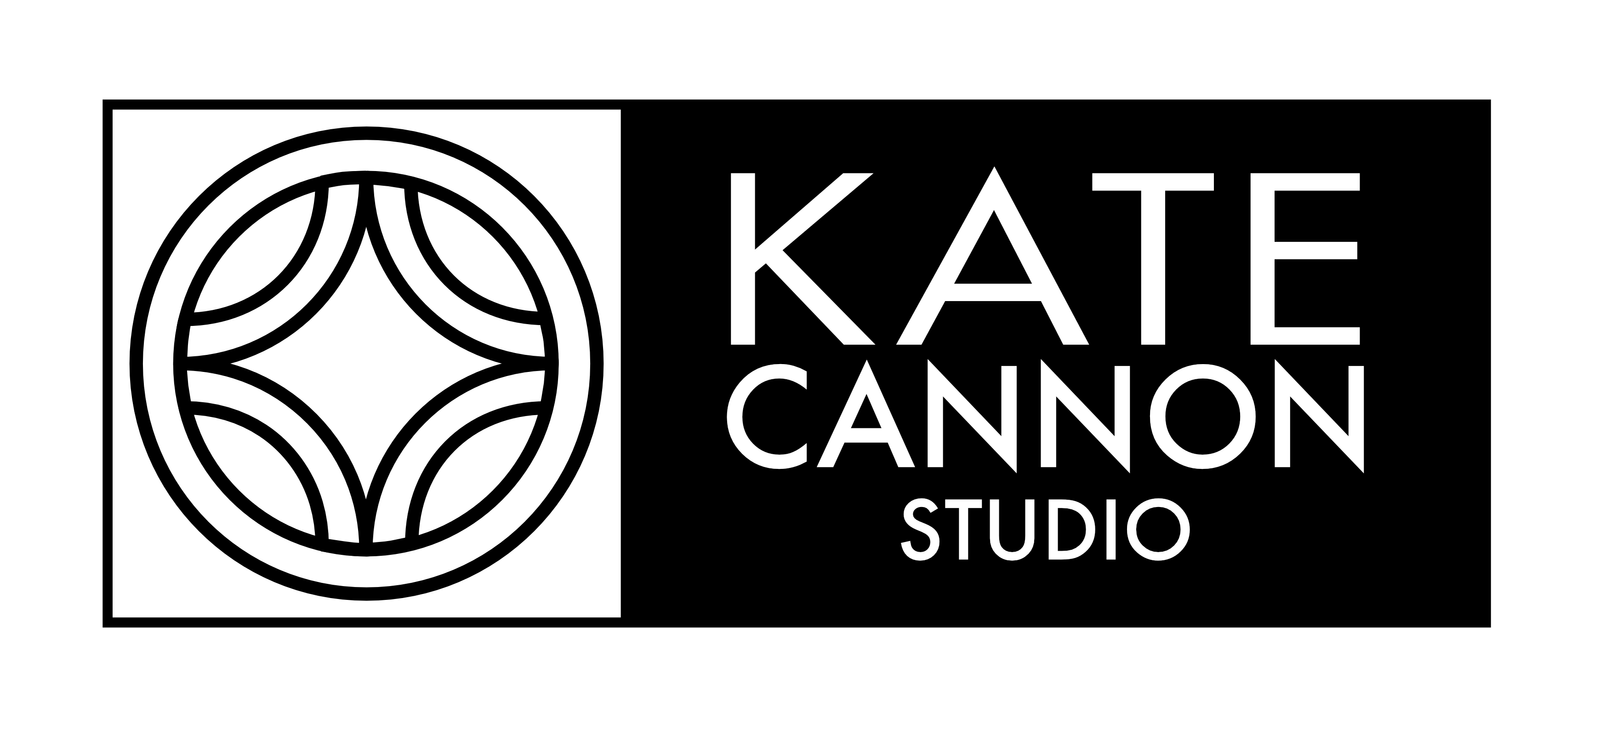 Kate Cannon Studio